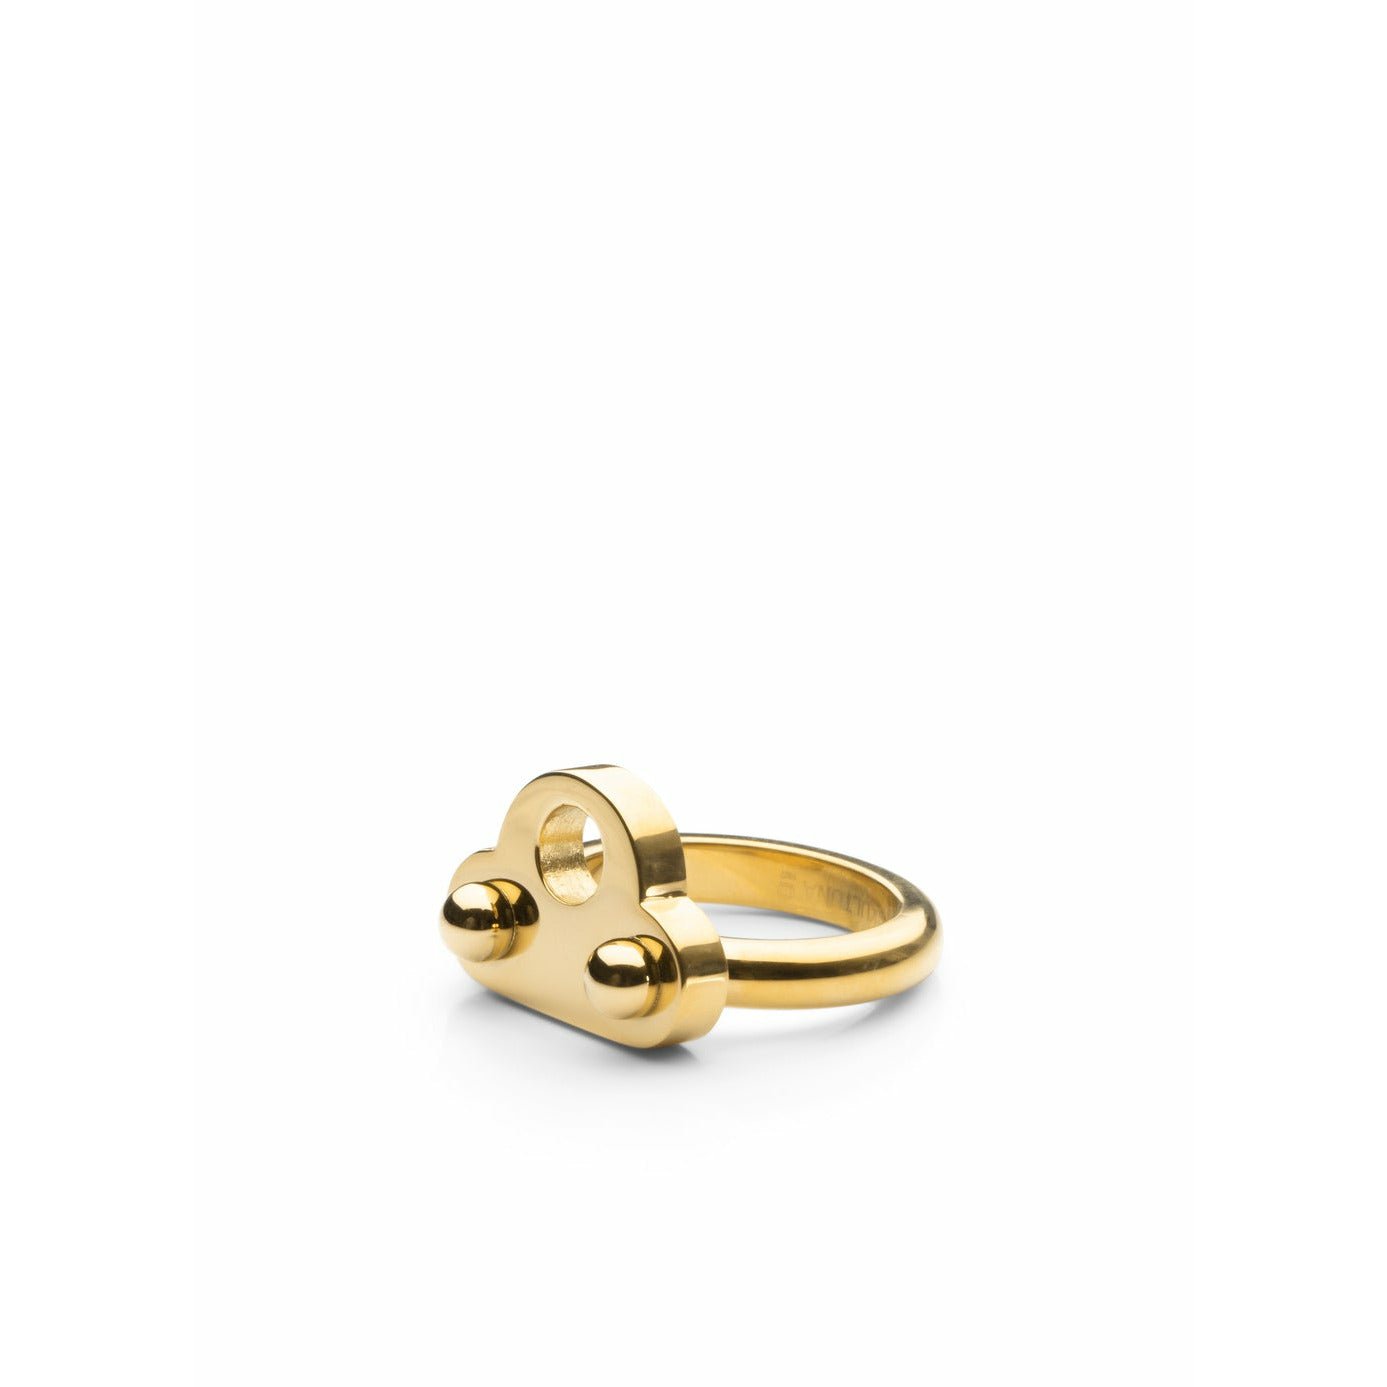 Skultuna Key Signet Ring Small Gold Plated, ø1,6 Cm